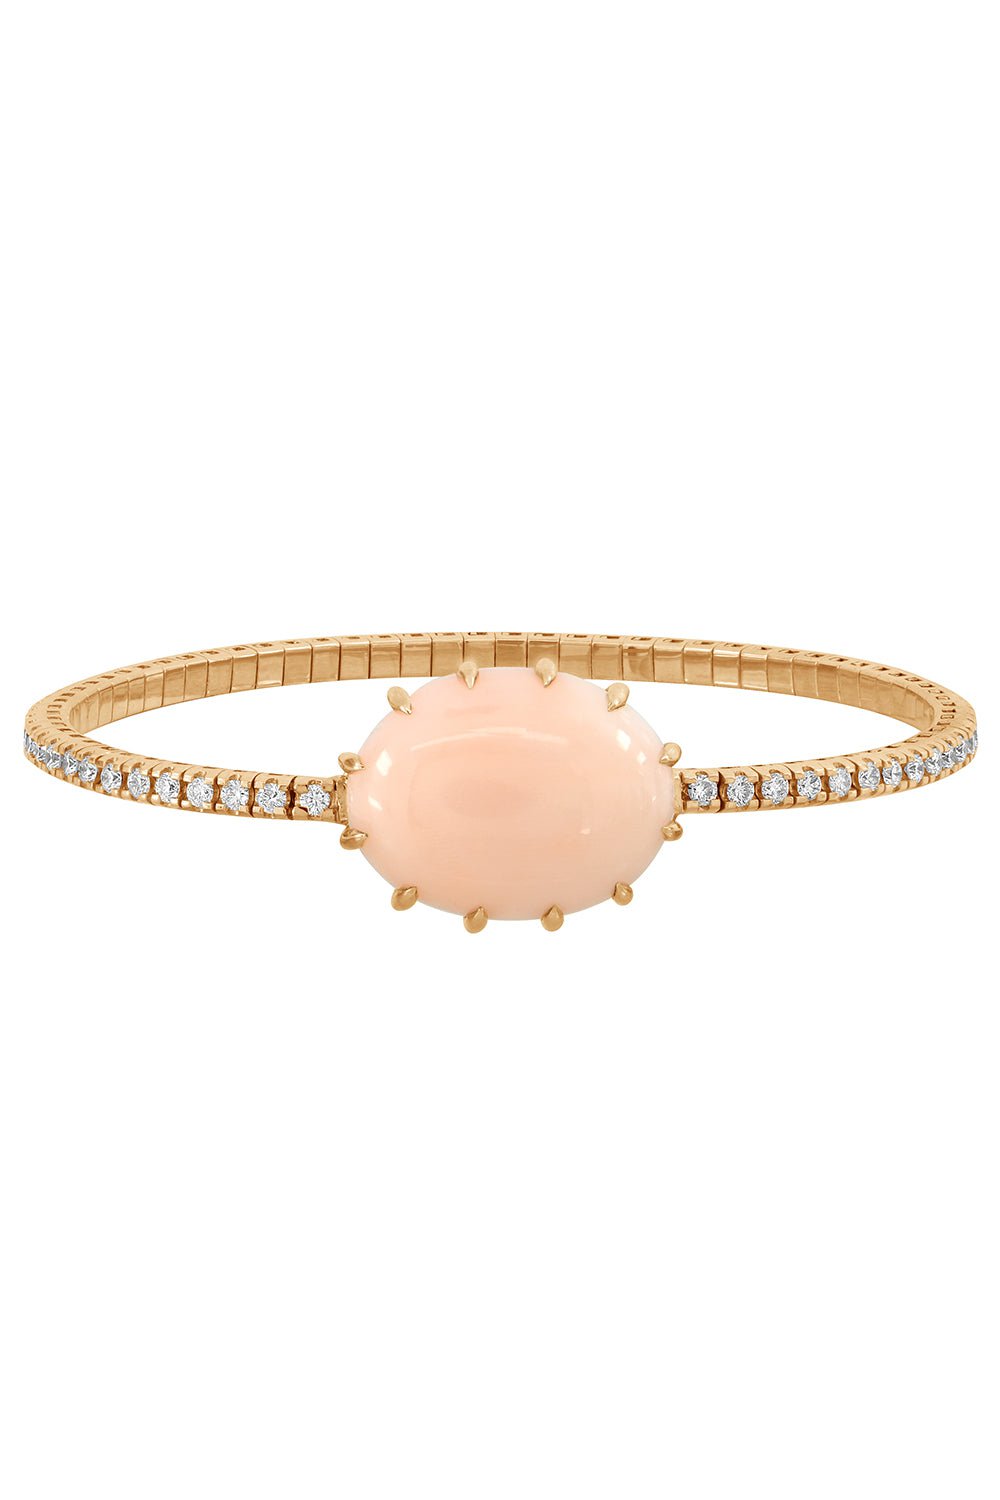 SUTRA-Diamond Angelskin Coral Bracelet-ROSE GOLD